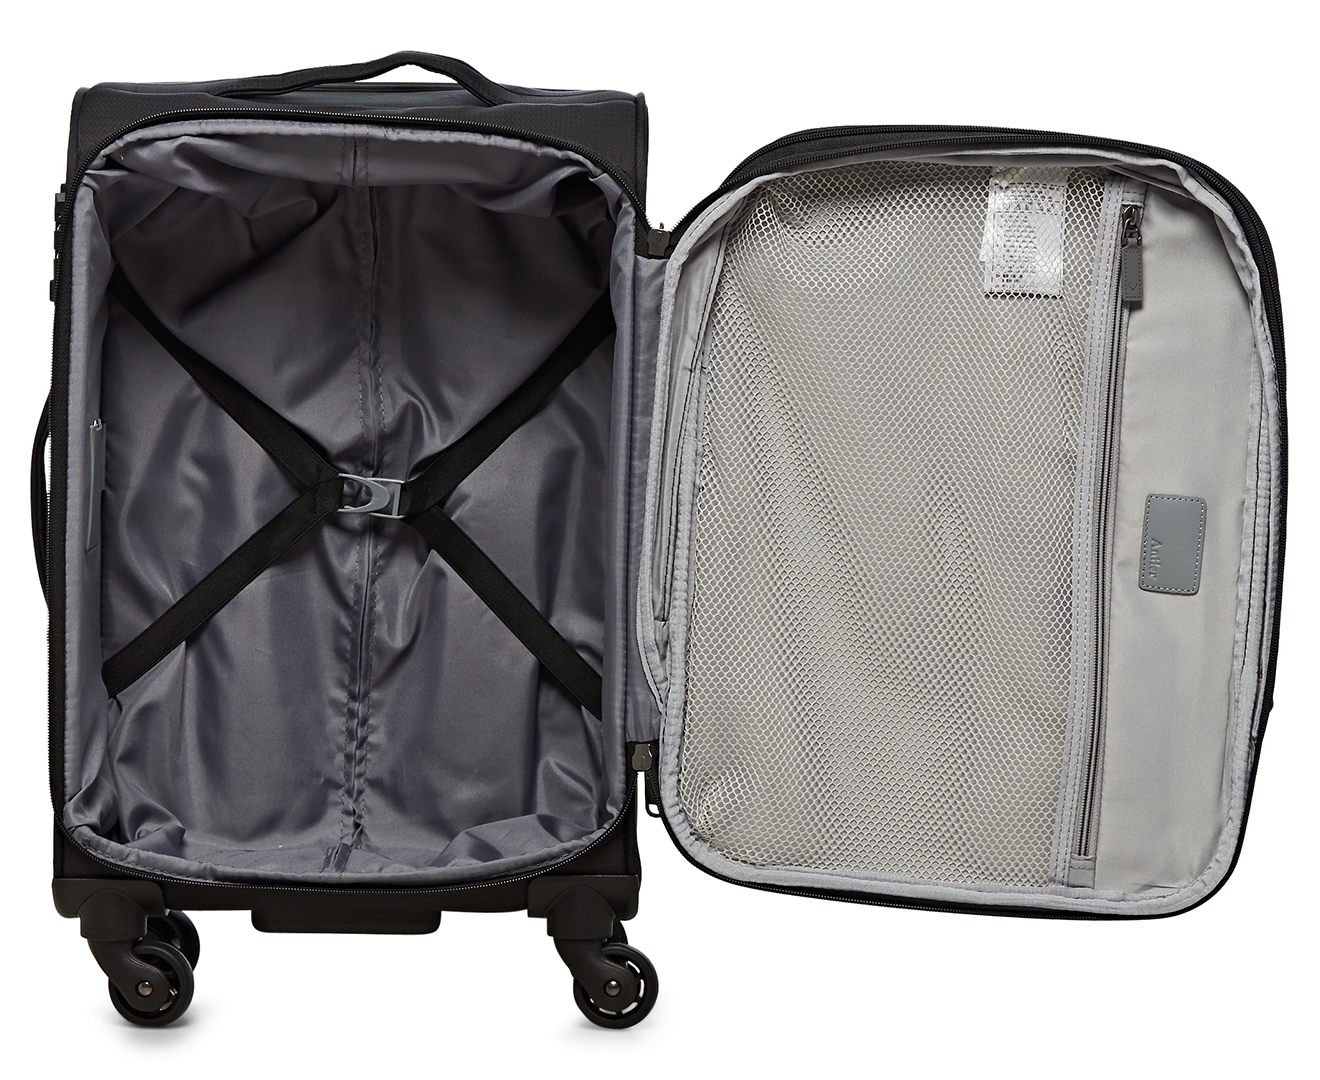 Antler Aura 3-Piece 4W Softcase Luggage/Suitcase Set - Black | Catch.com.au